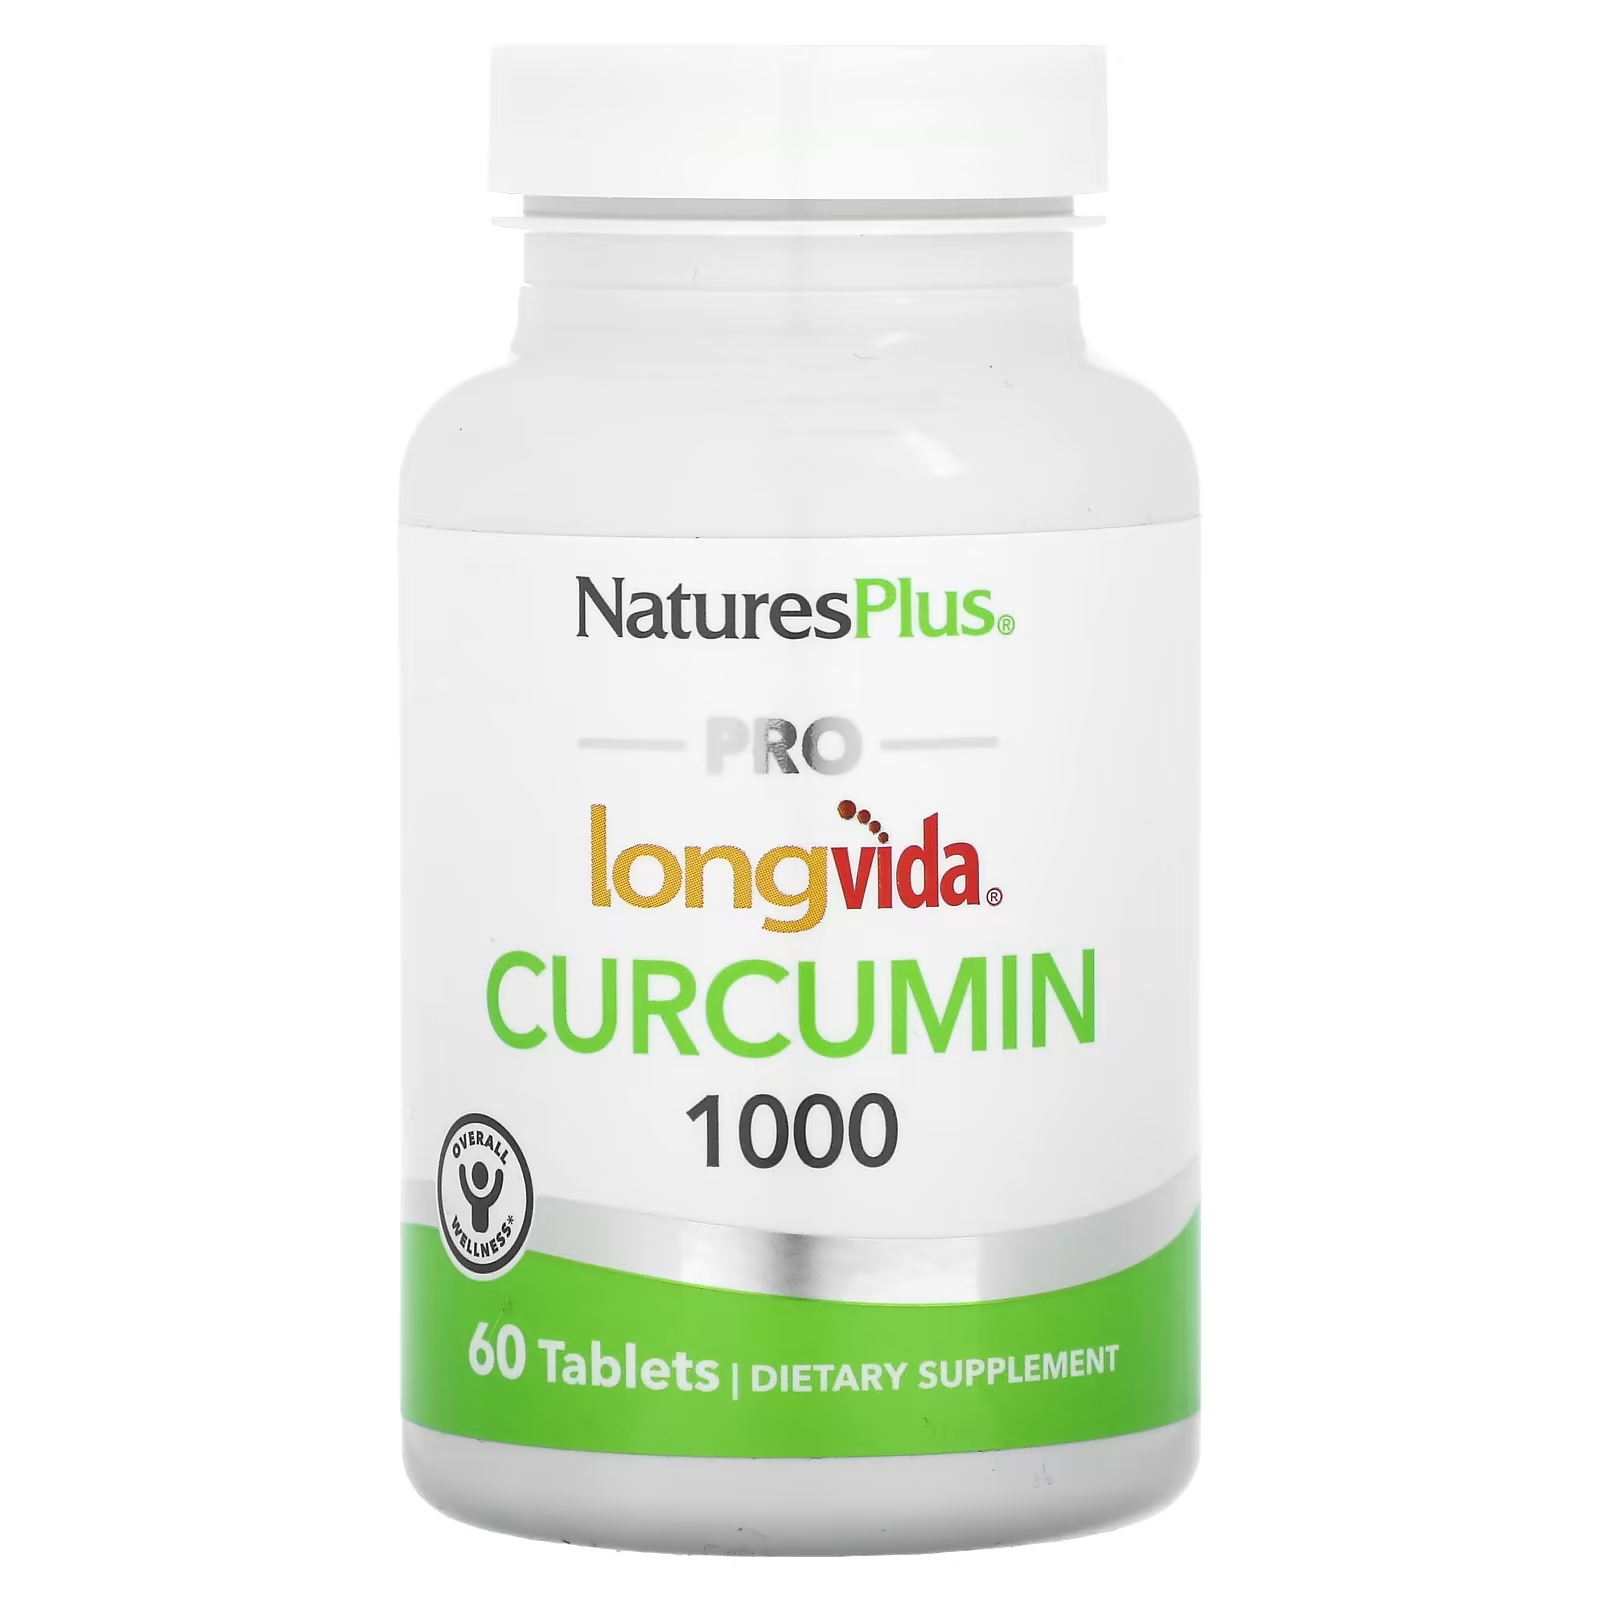 Пищевая добавка, NaturesPlus Pro Longvida Куркумин 1000, 60 таблеток naturesplus pro longvida куркумин 1000 60 таблеток